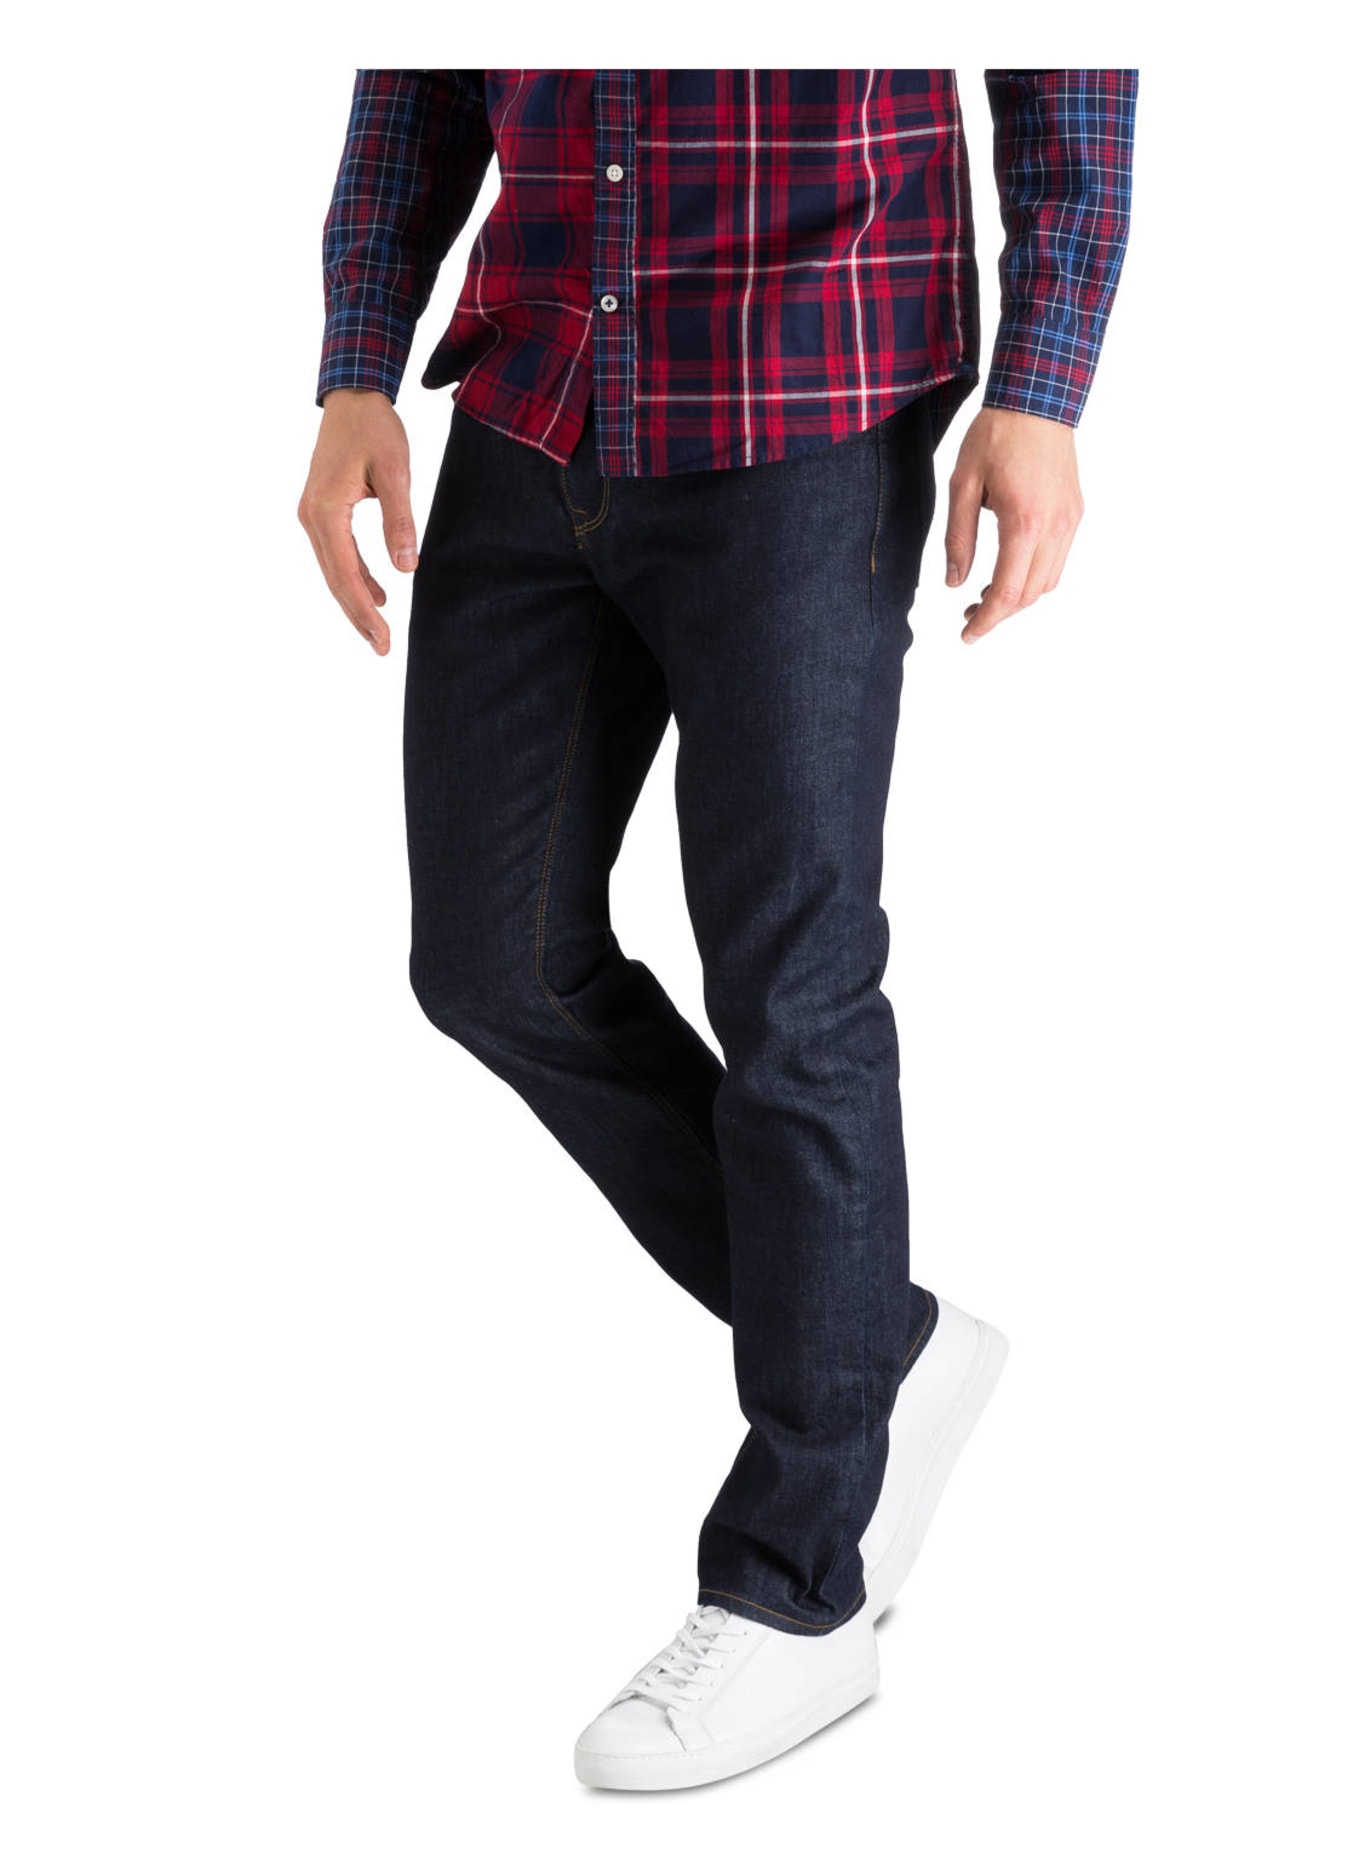 TOMMY HILFIGER Jeans DENTON Straight Fit, Farbe: 919 rinsed (Bild 2)